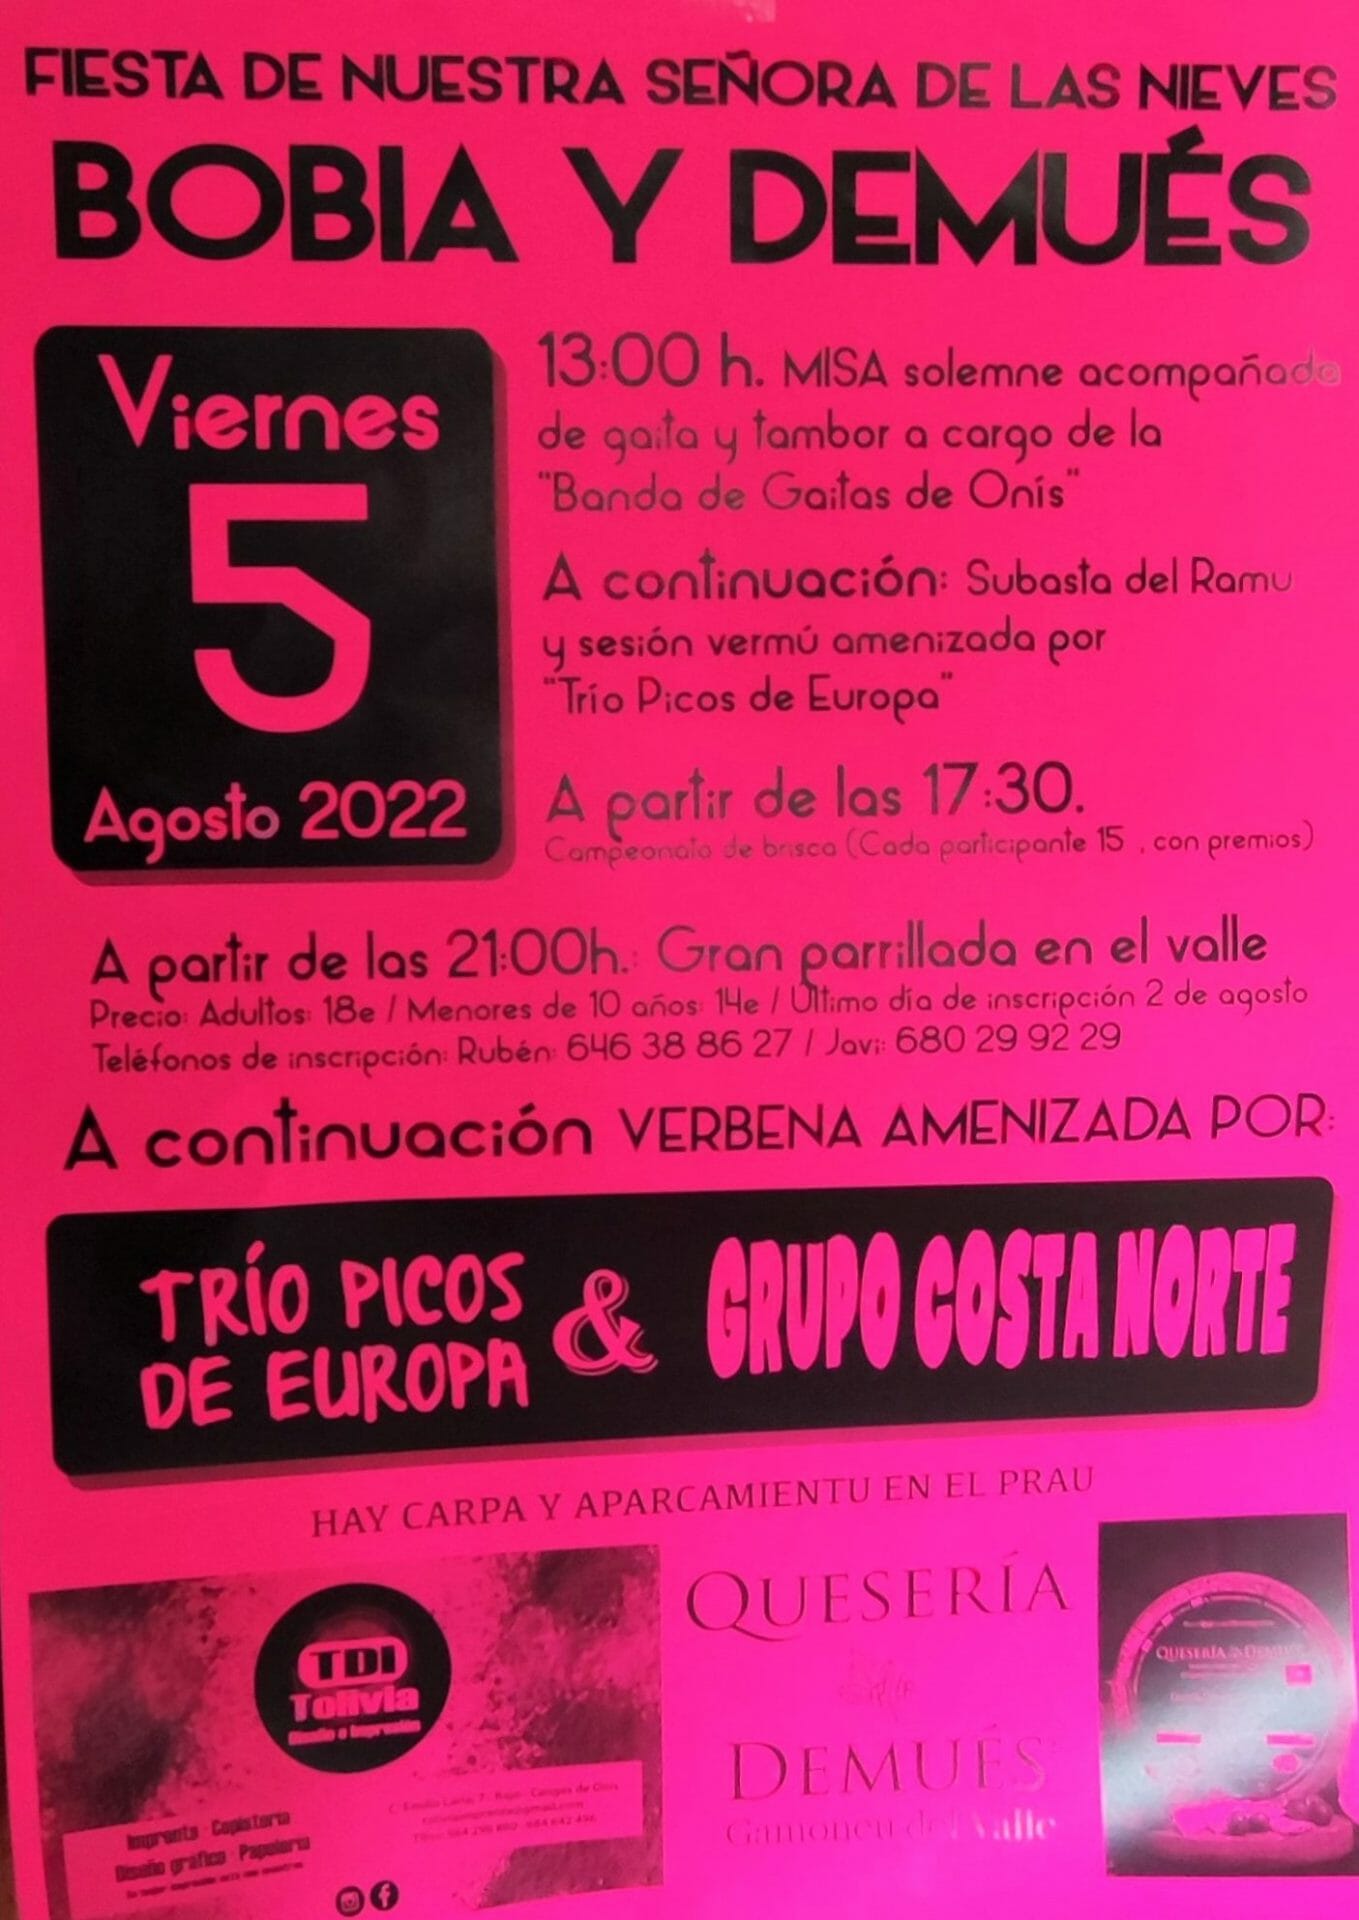 Cartel Fiestas Las Nieves Bobia y Demues 2022